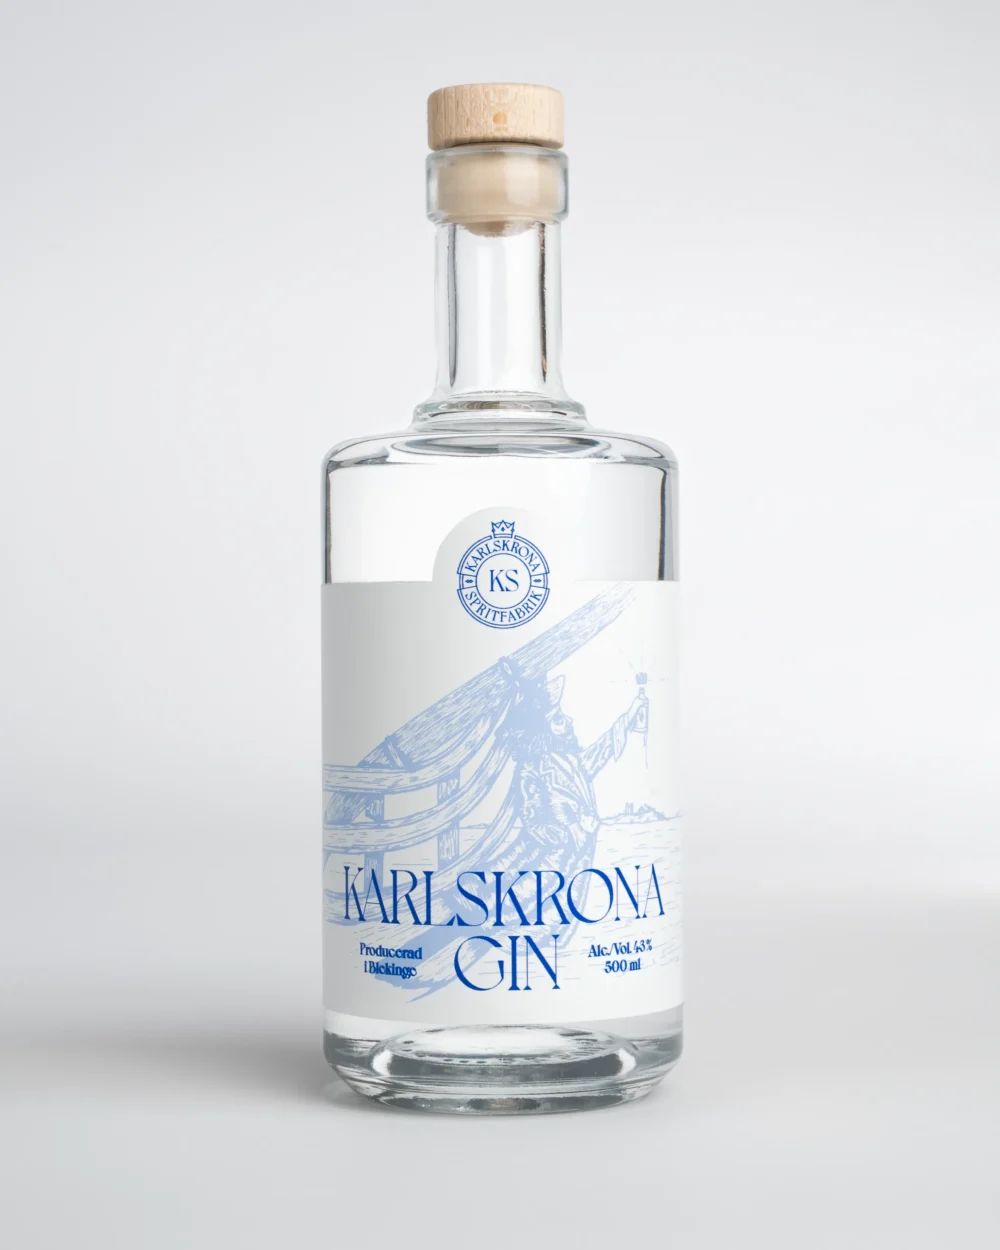 Karlskrona Spritfabrik Gin